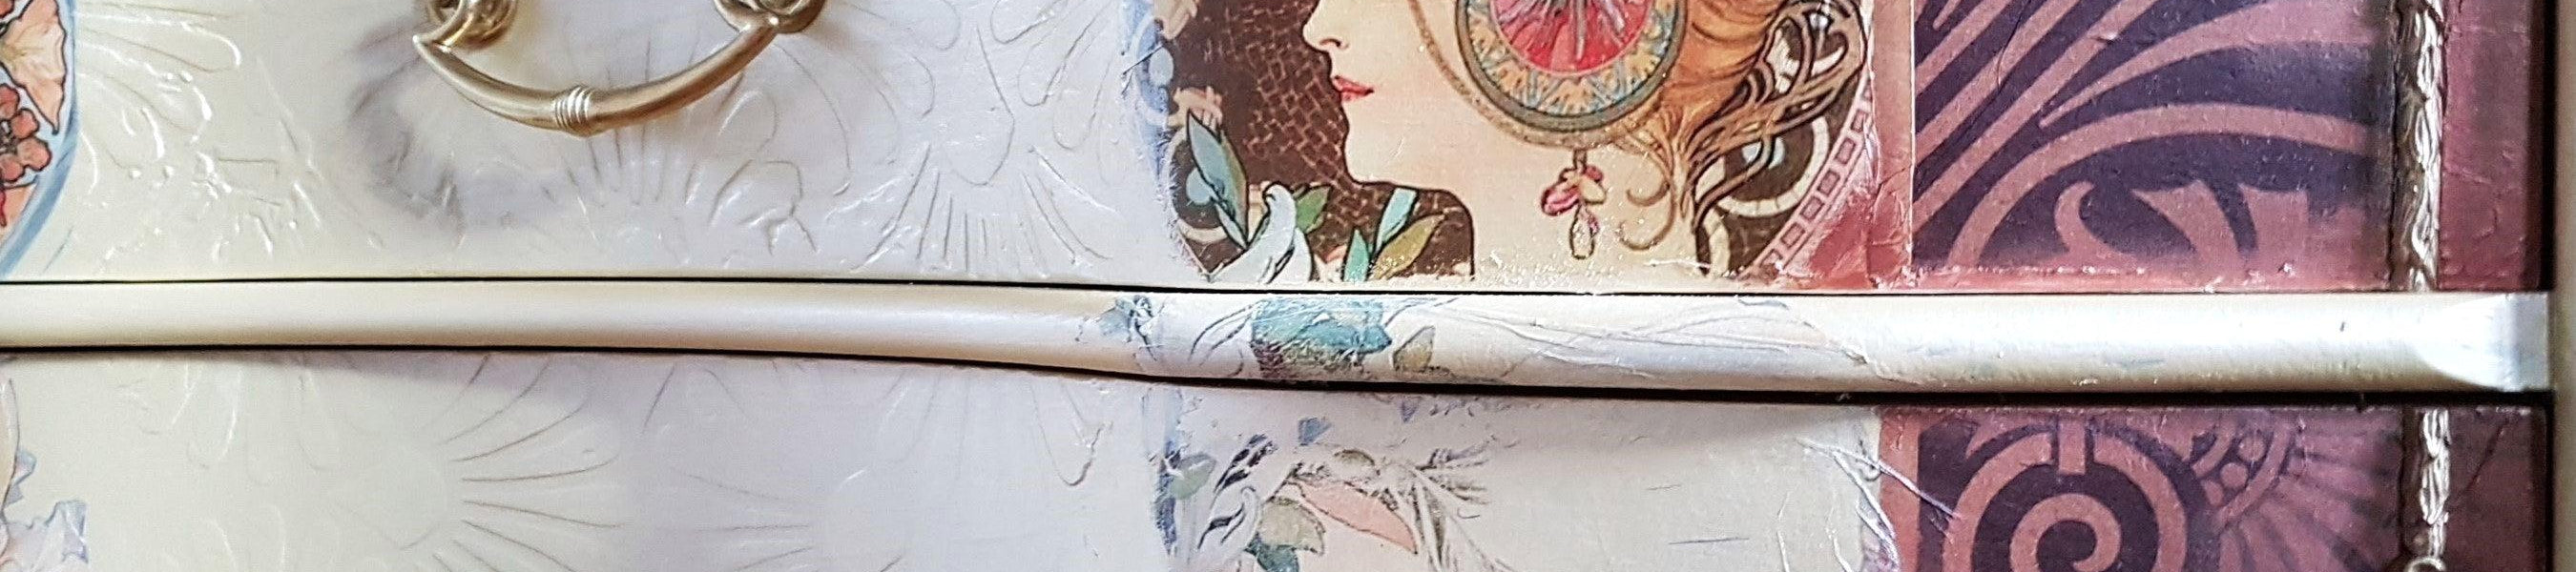 Lioness-Vintage-Decoupage-Seidenpapier-Möbelgestaltung